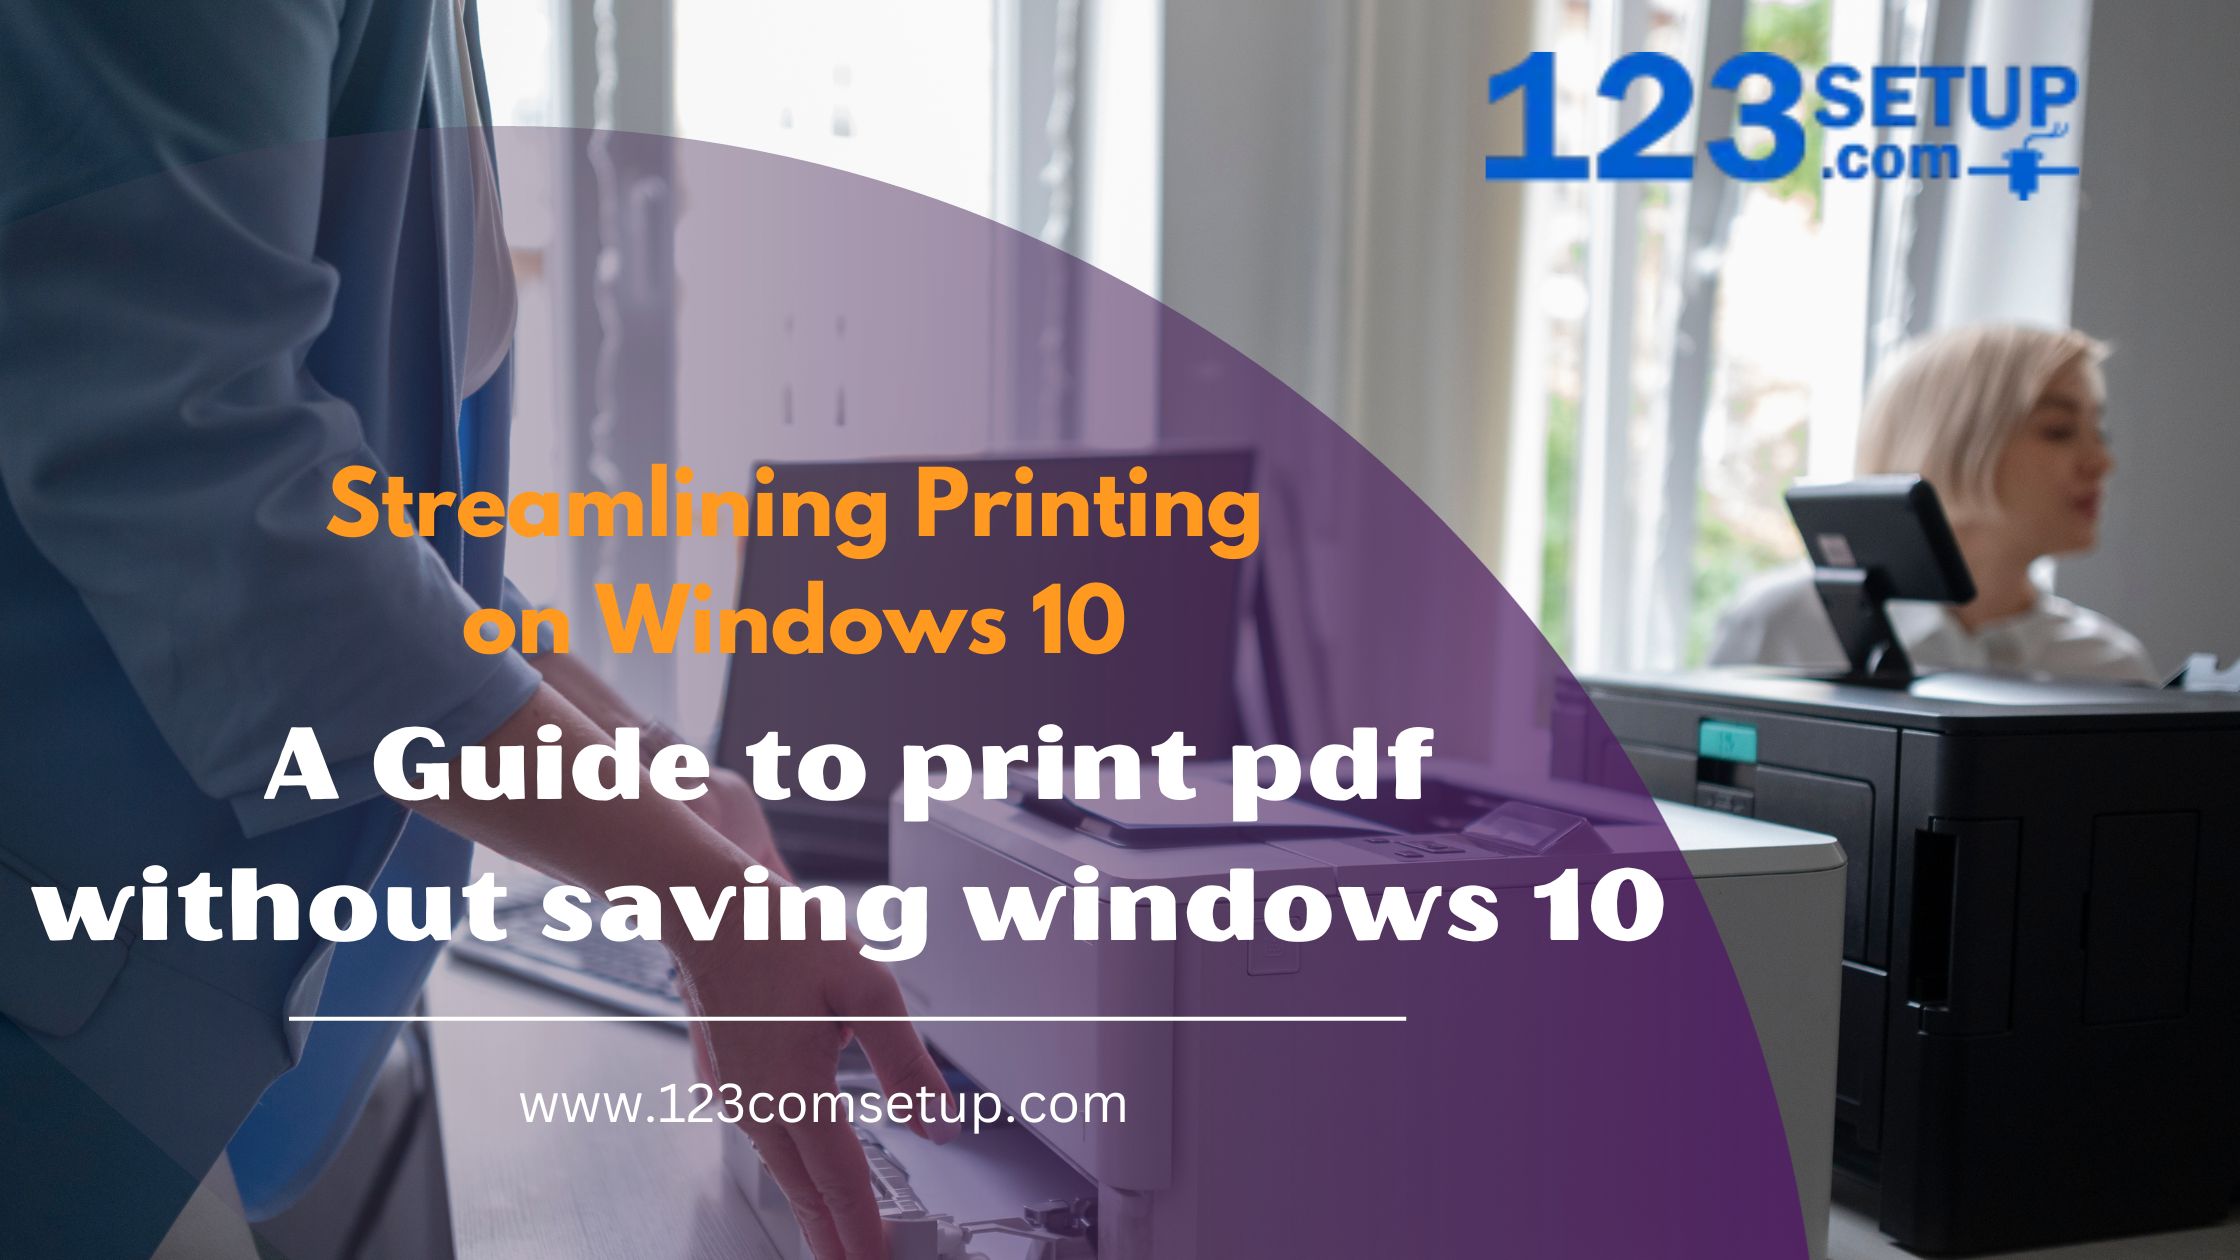 Streamlining Printing on Windows 10: A Guide to print pdf without saving windows 10